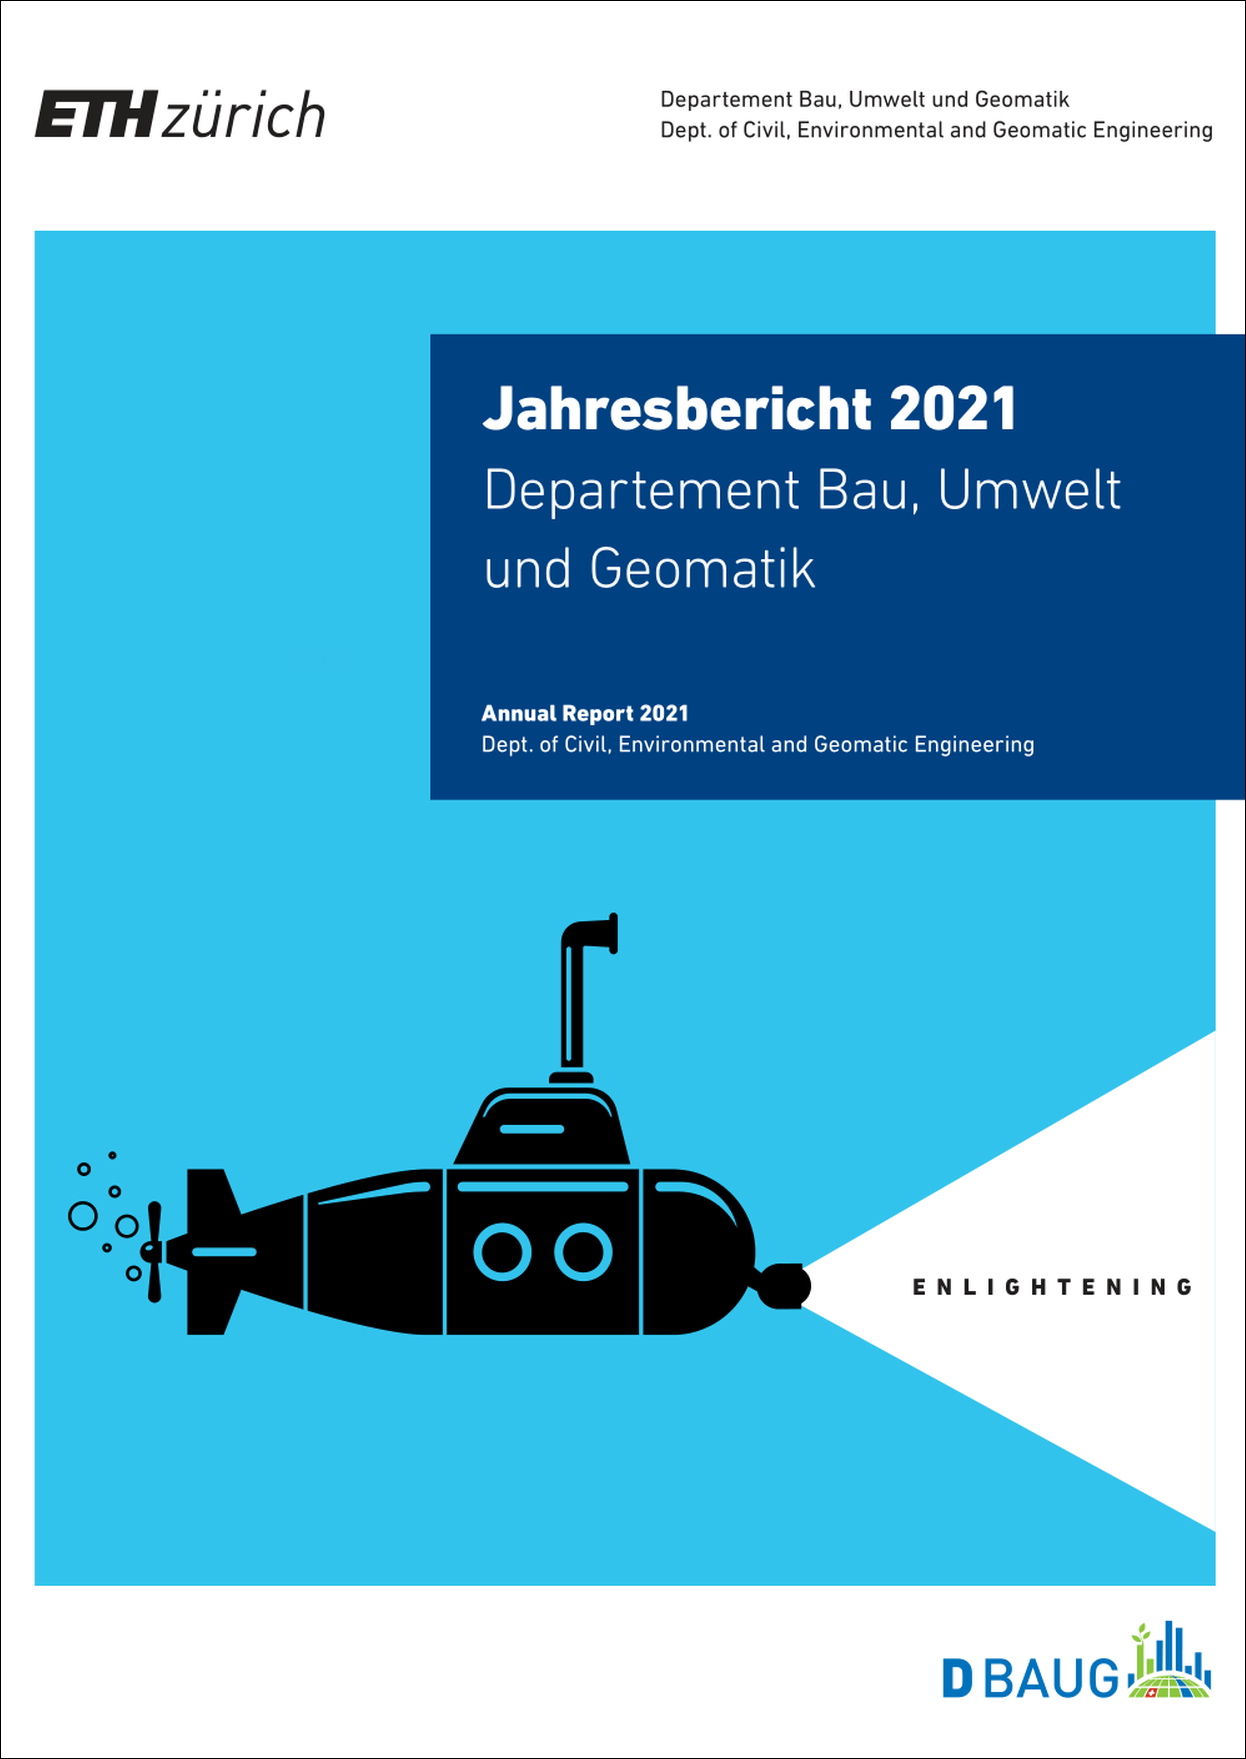 D-BAUG annual report 2021